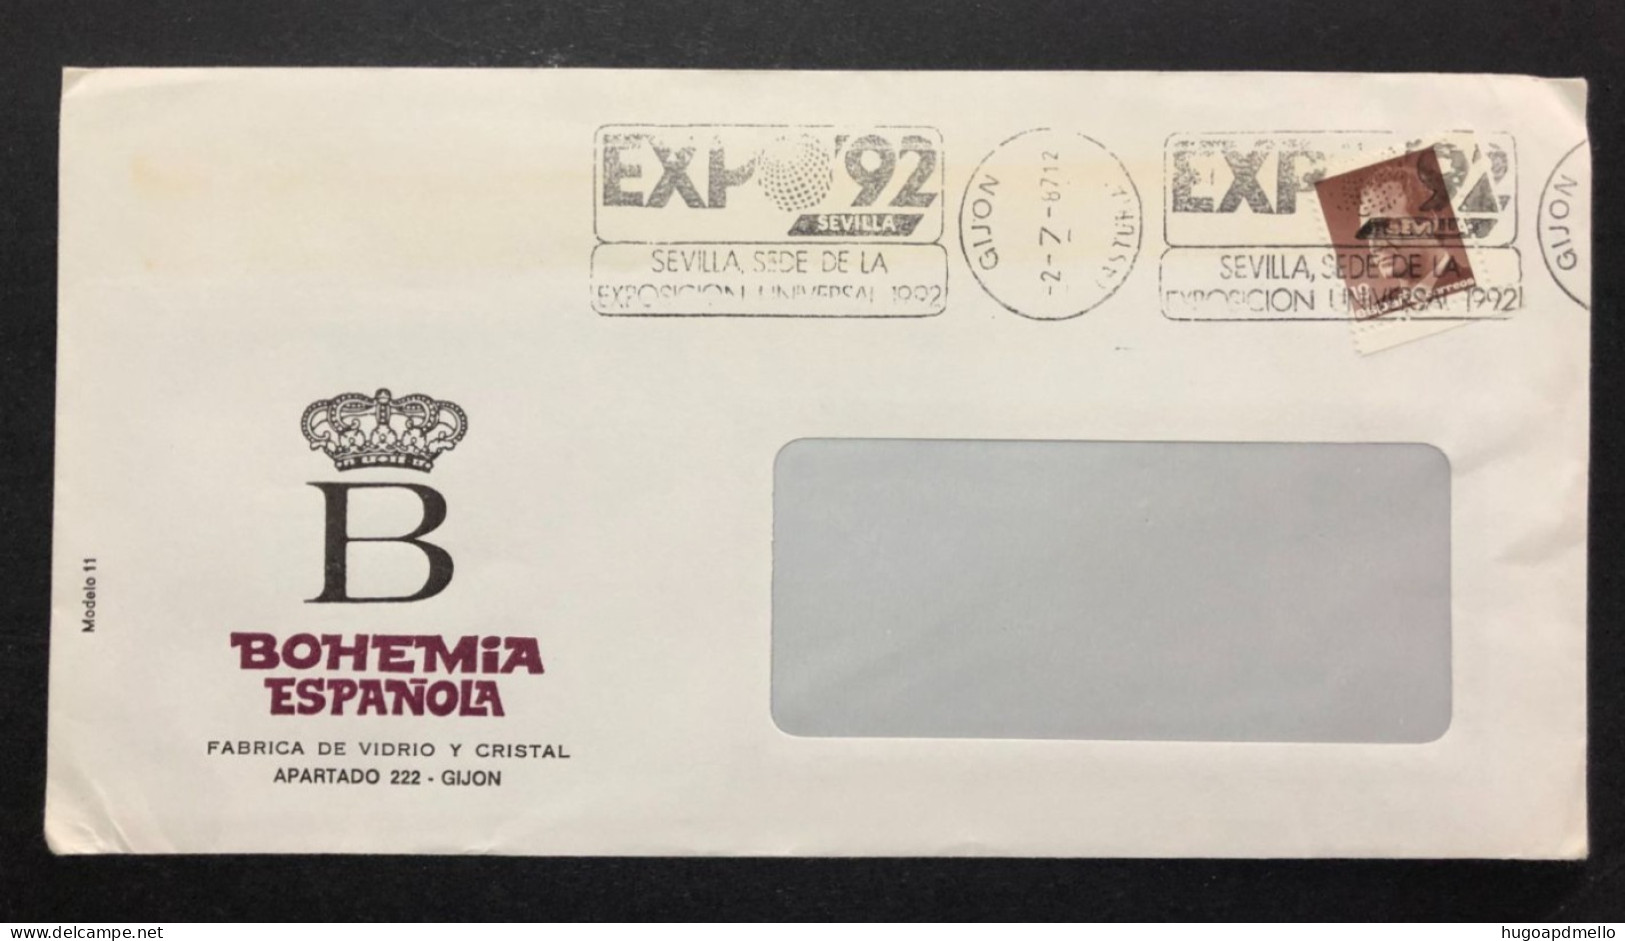 SPAIN, Cover With Special Cancellation « EXPO '92 », « GIJON Postmark », 1987 - 1992 – Sevilla (Spain)